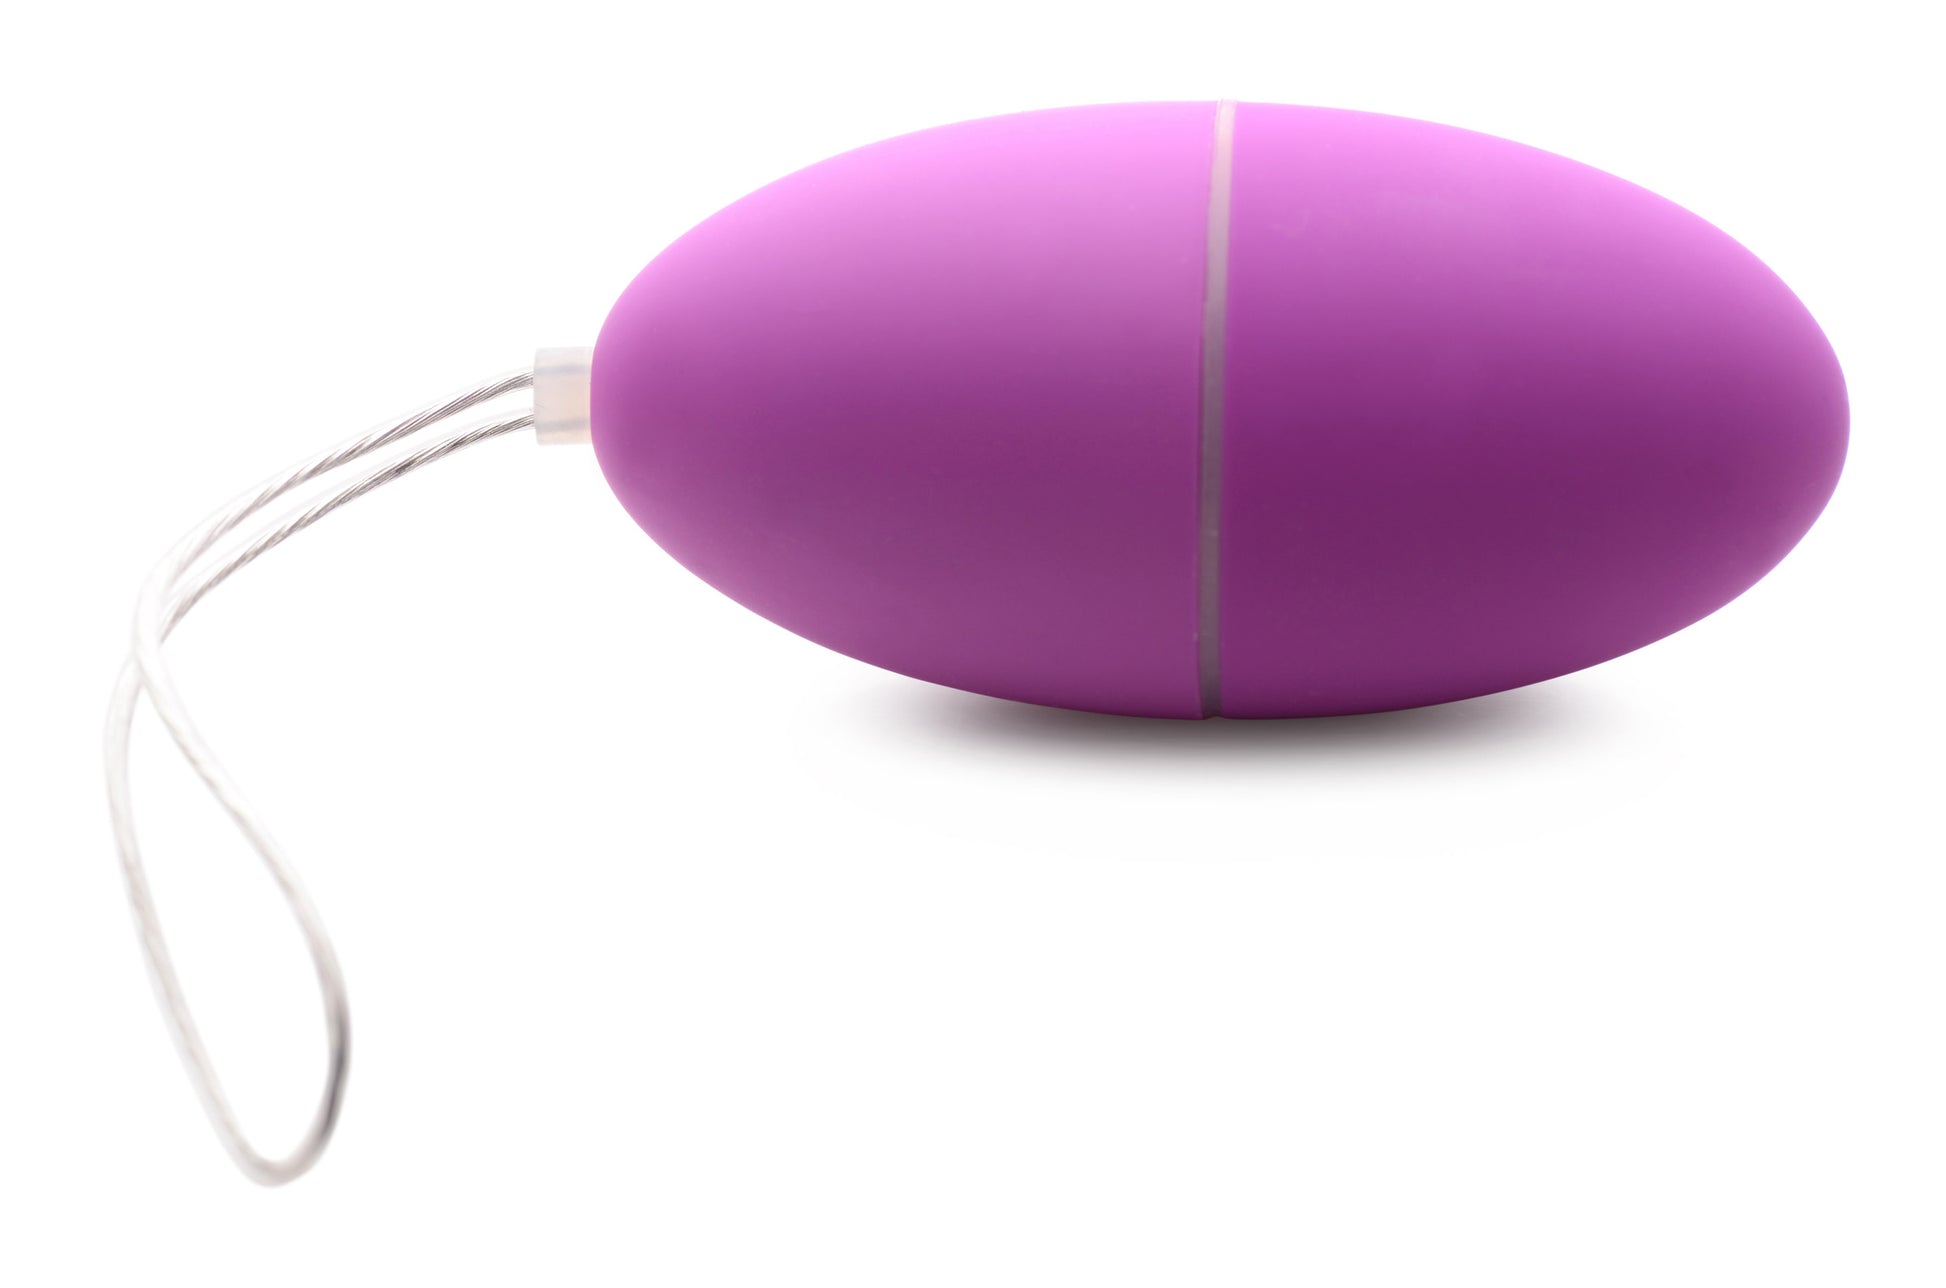 28X Scrambler Vibrating Egg with Remote Control - Purple - UABDSM